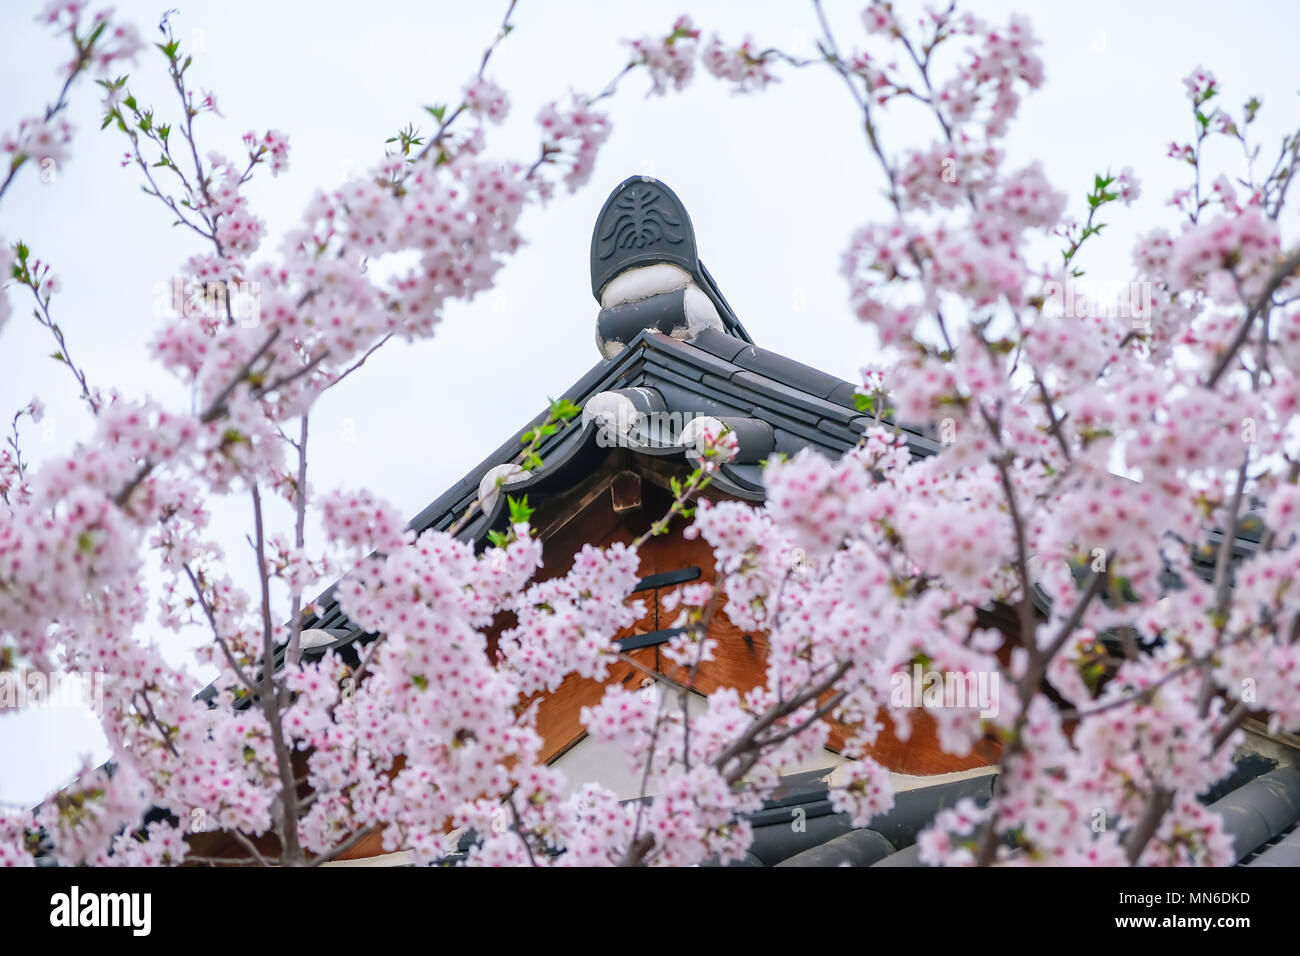 Korean building with beautiful cherry blossom, South Korea. Stock Photo